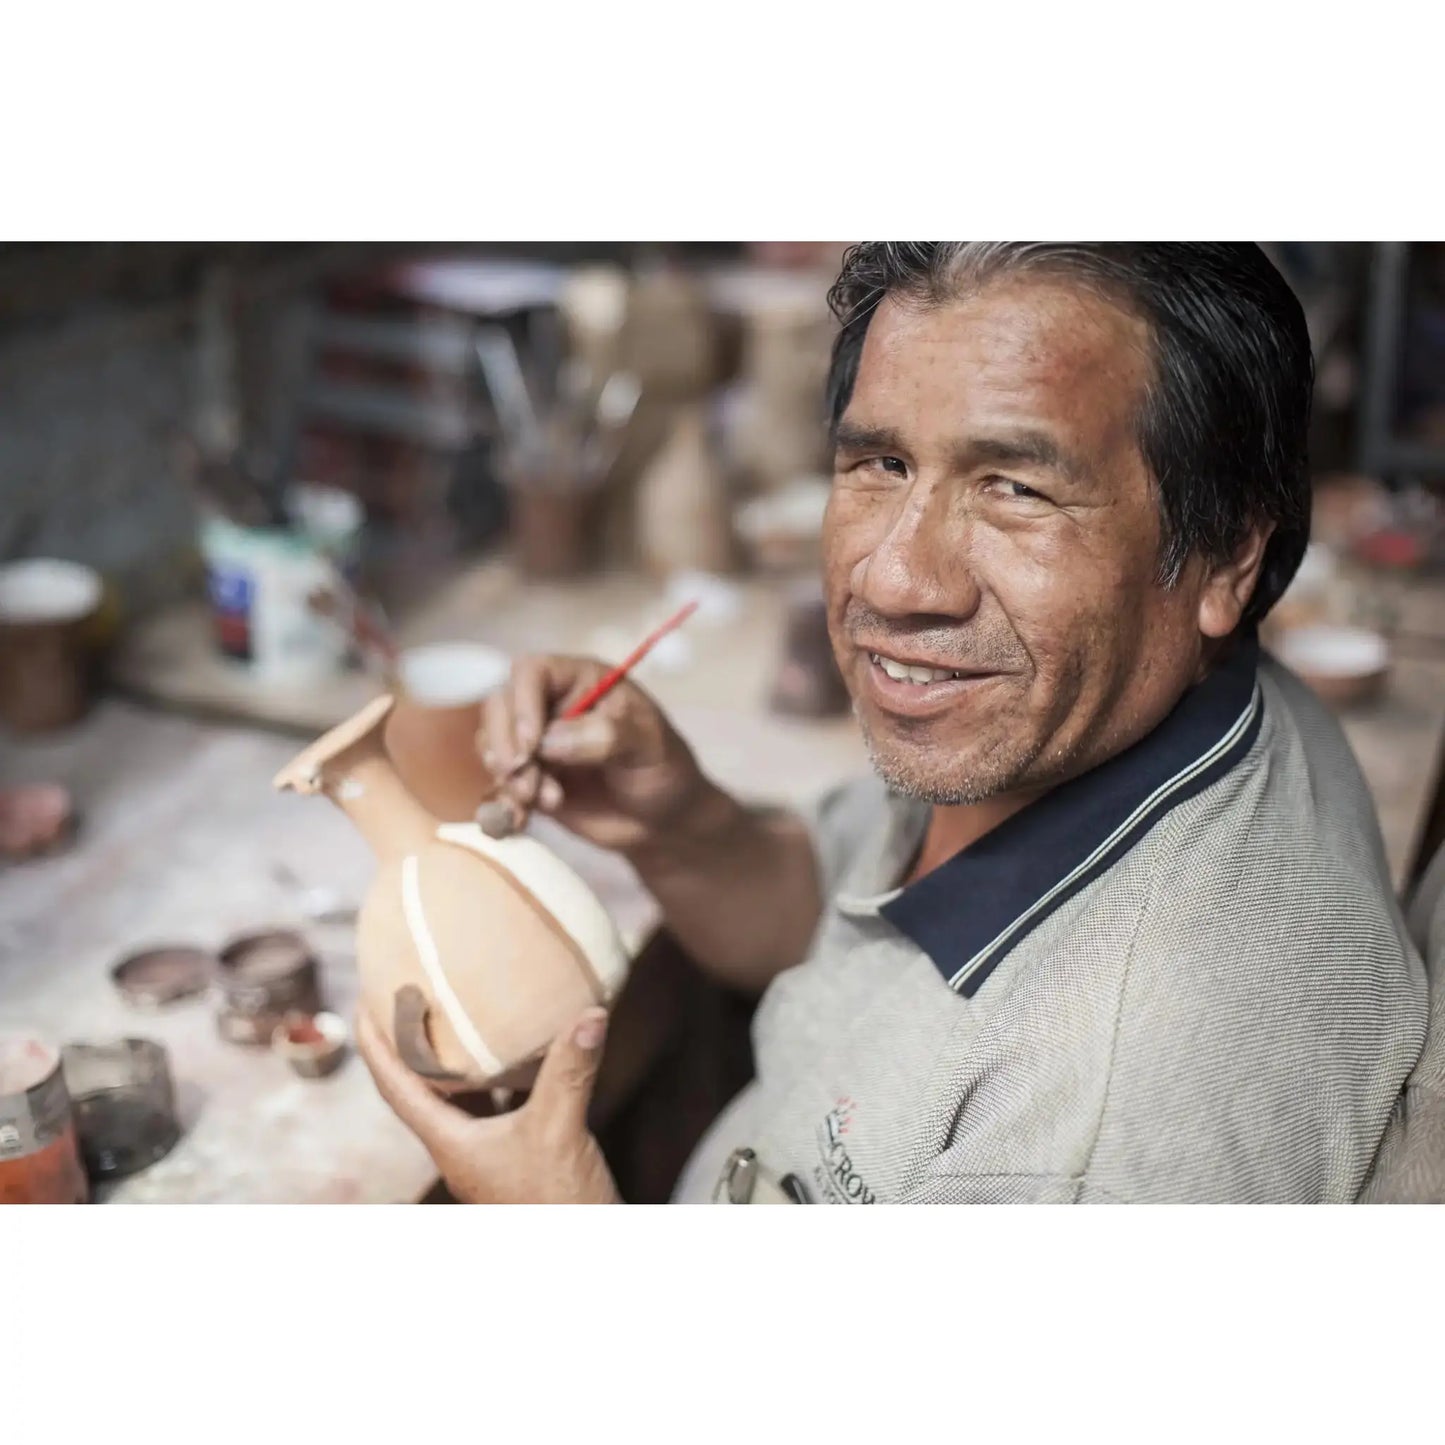 Moche Pot - Handcrafted Ceramic Decorative Vase from Peru -